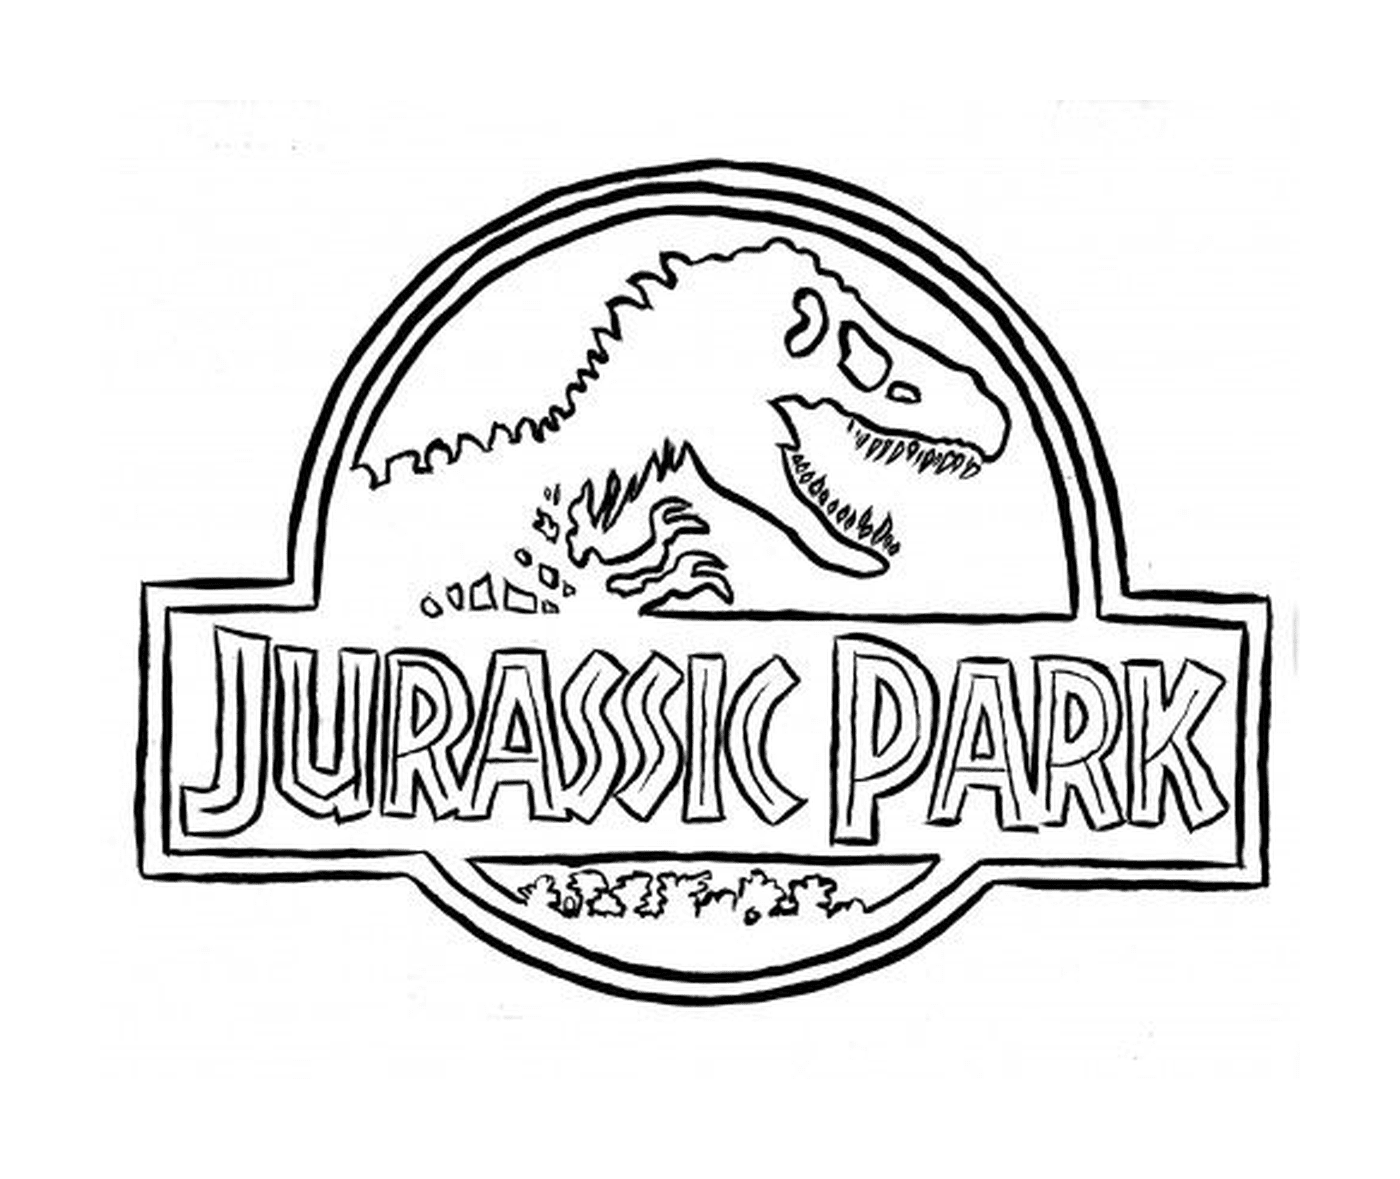  Logo de Jurassic Park, símbolo mítico 